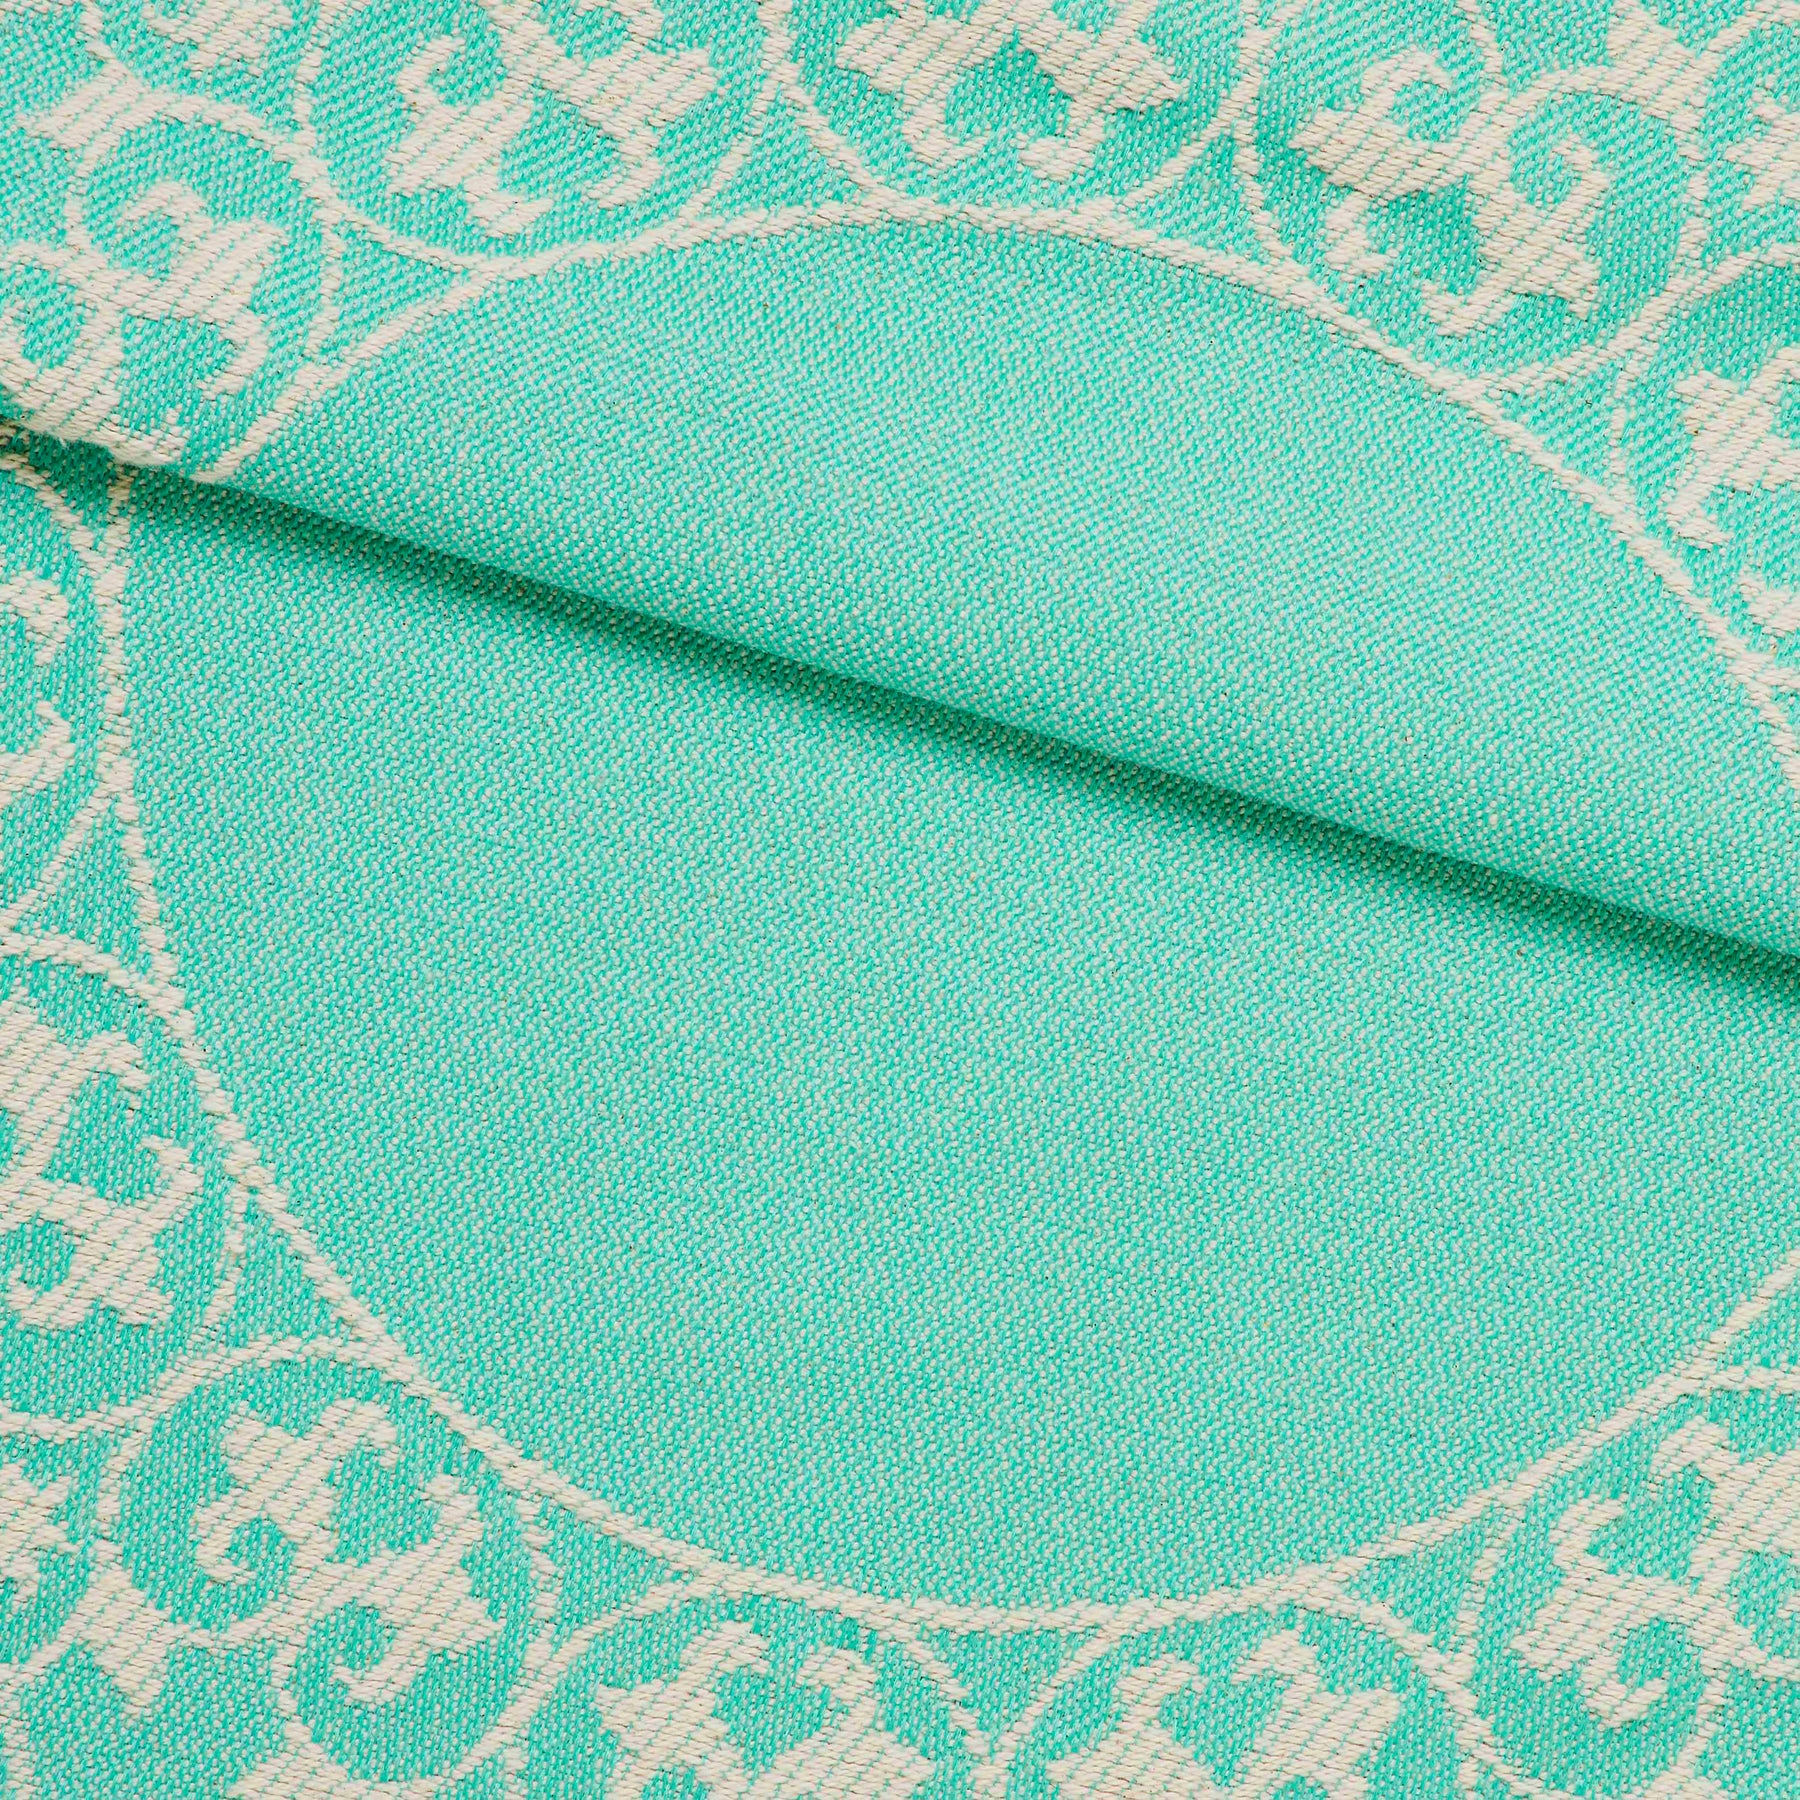 Superior Lyron Cotton Blend Woven Jacquard Vintage Floral Scroll Lightweight Bedspread and Sham Set - Turquoise